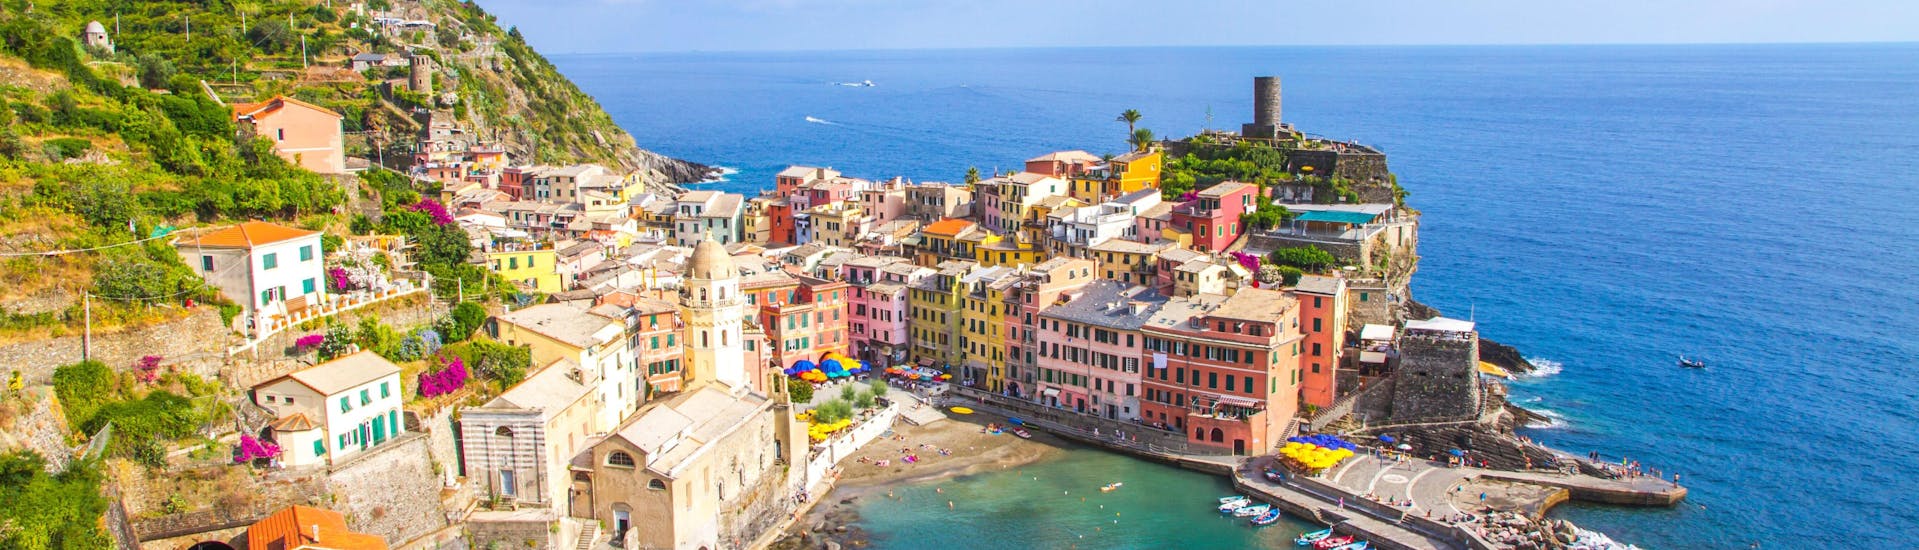 View over Vernazza, a popular destination for boat trips in Cinque Terre.